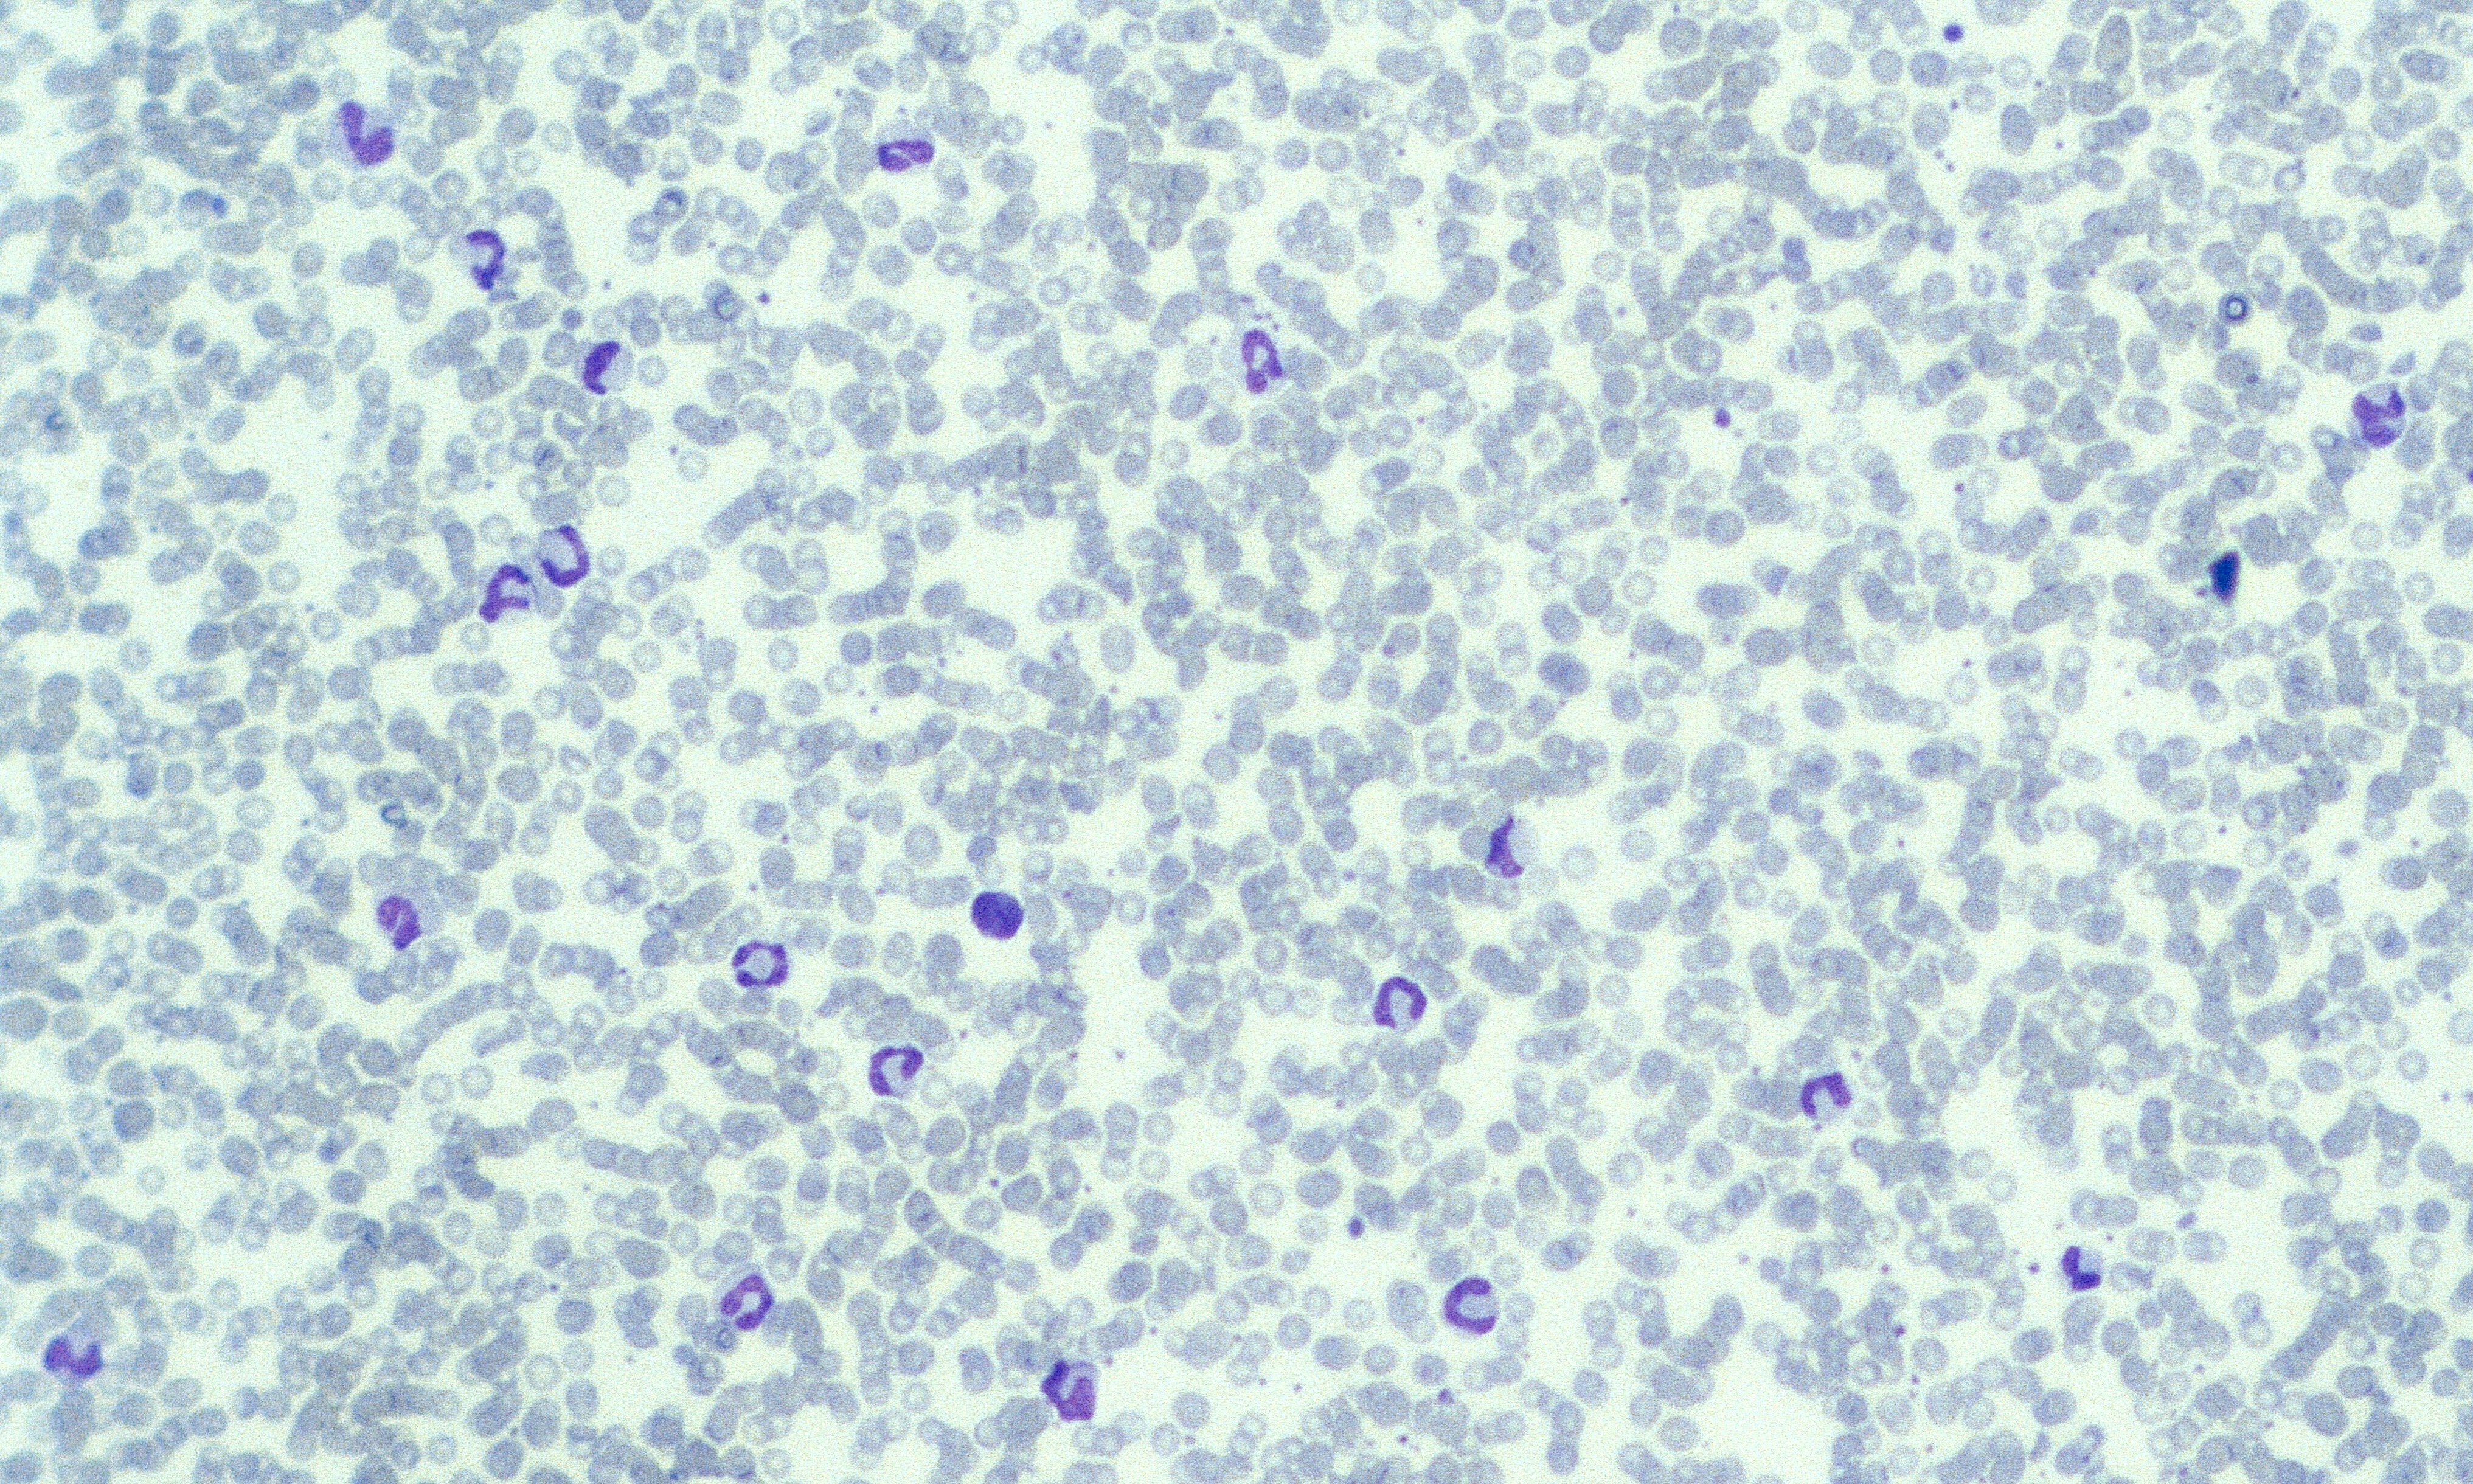 Neutrophils 15 (Canine 6 - Neutrophilia)